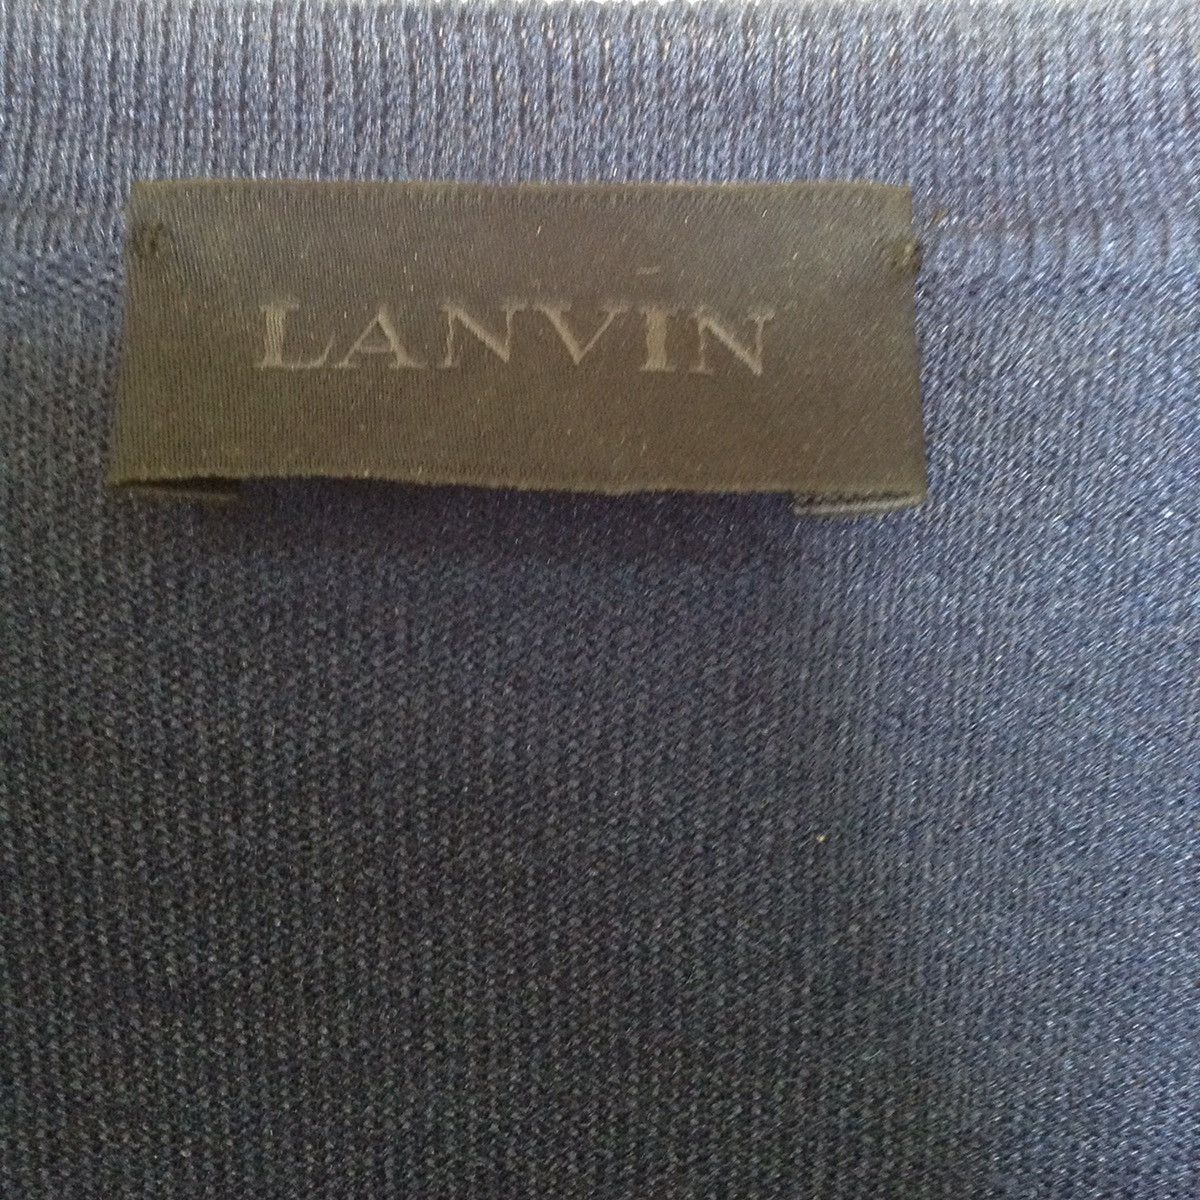 Lanvin LANVIN embroidered detail v-neck jumper/sweater Size US L / EU 52-54 / 3 - 3 Preview